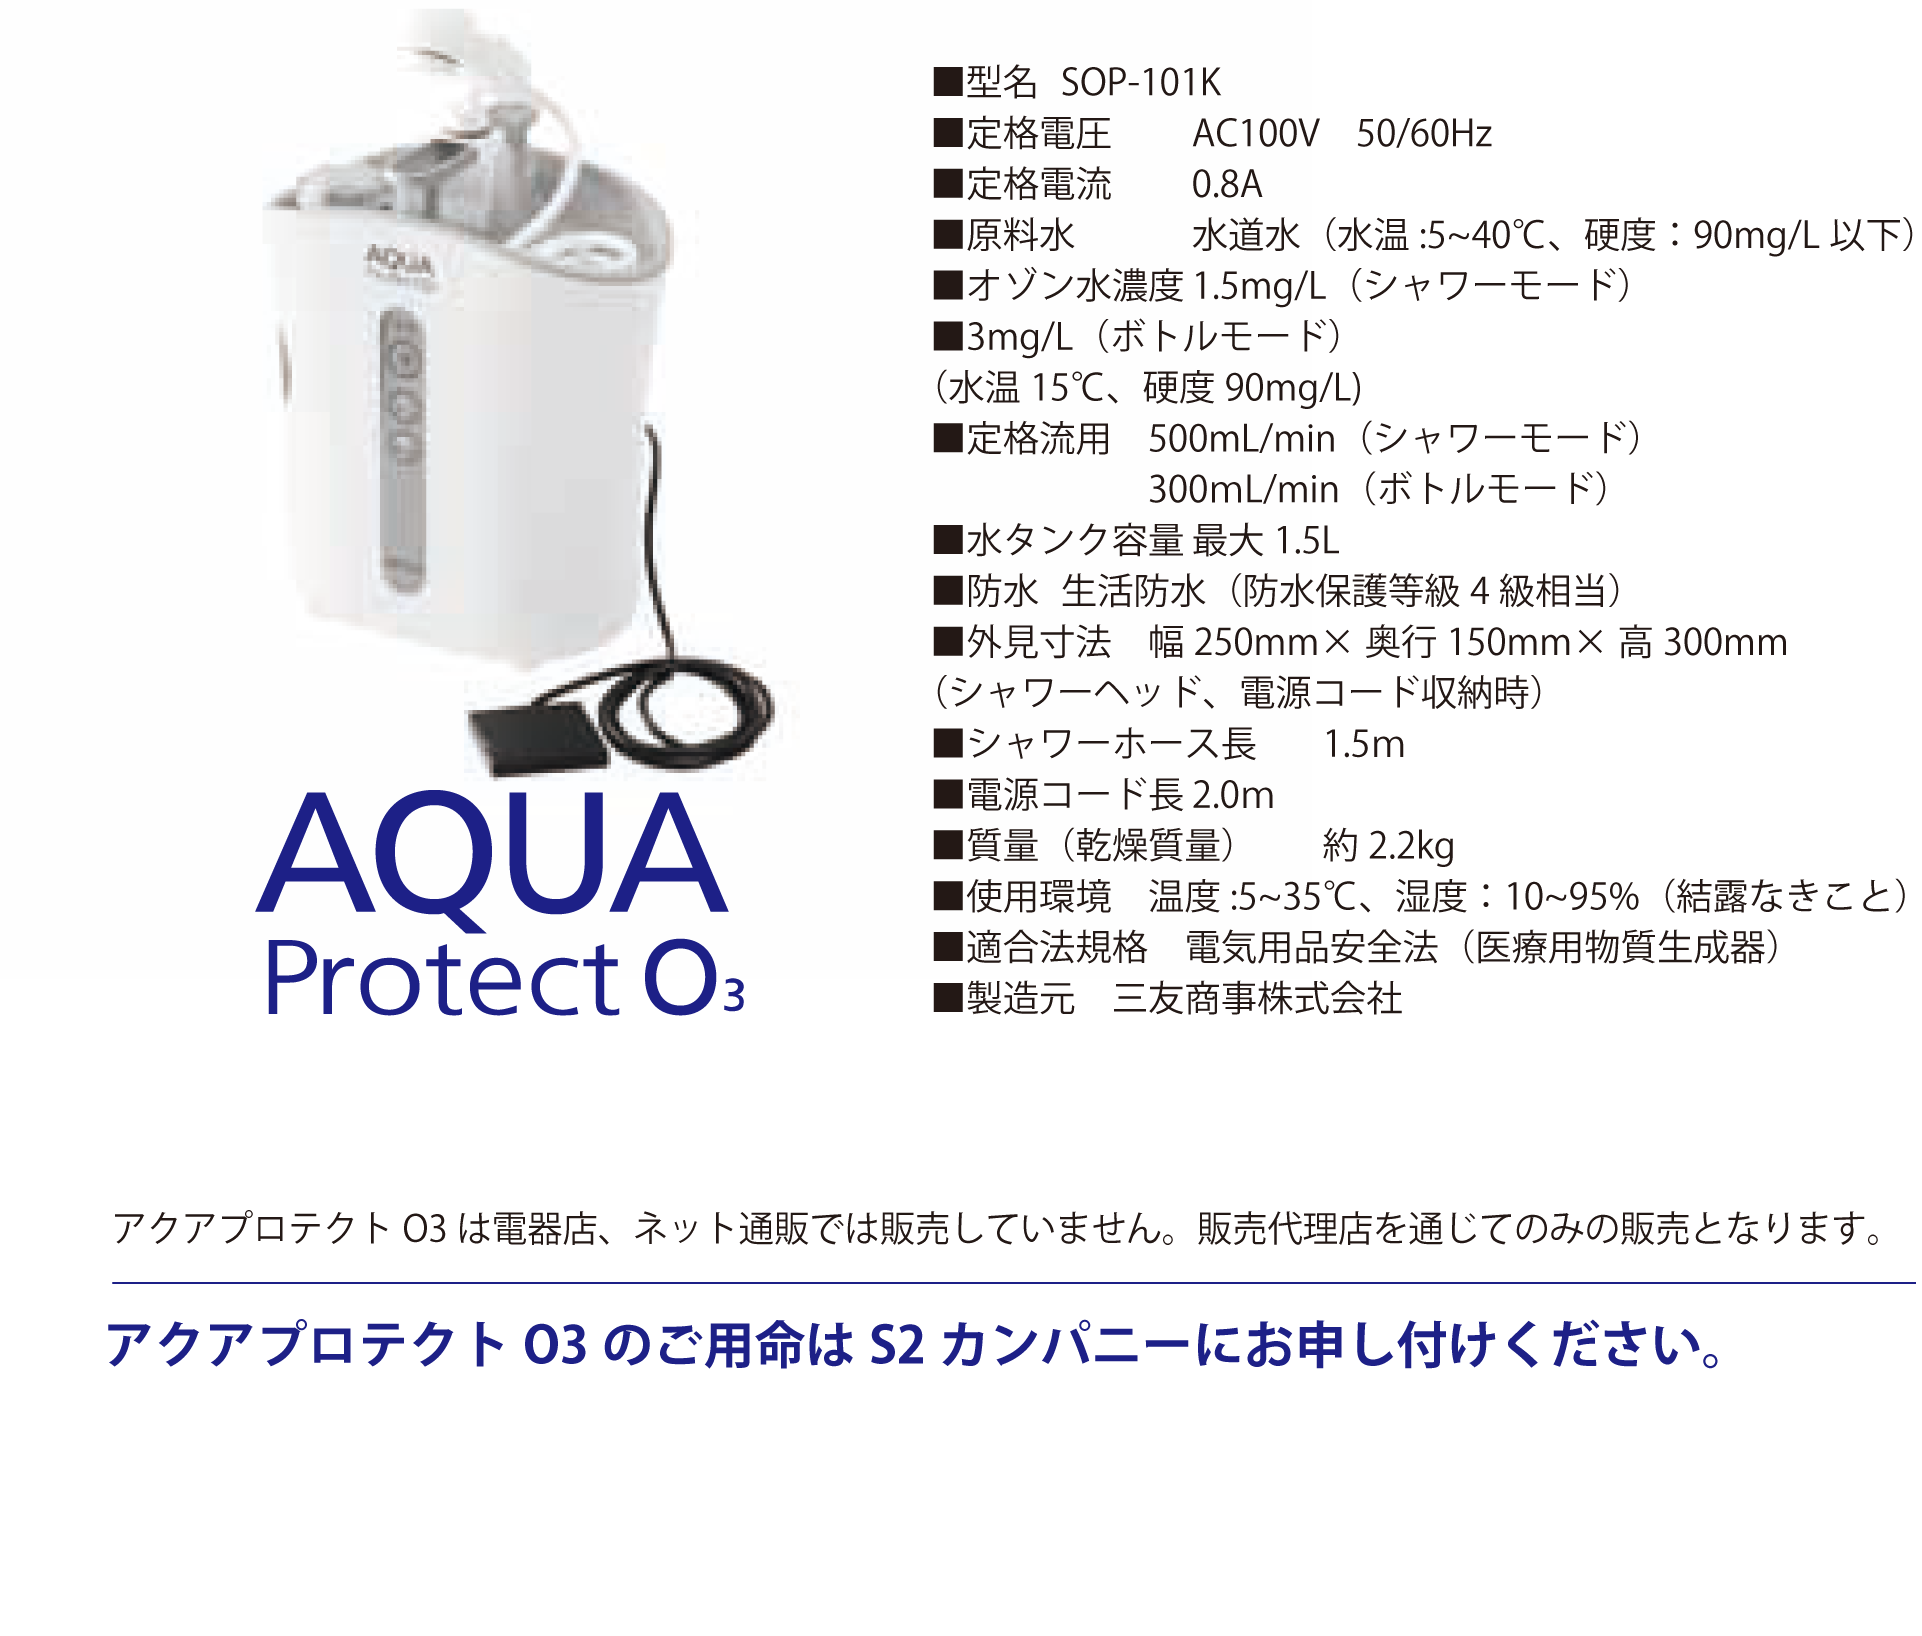 AQUA Protect O3 ■型名 SOP-101K ■定格電圧	AC100V 50/60Hz ■定格電流 0.8A ■原料水 水道水（水温:5~40℃、硬度：90mg/L以下） ■オゾン水濃度 1.5mg/L（シャワーモード） ■3mg/L（ボトルモード） （水温15℃、硬度90mg/L) ■定格流用 500mL/min（シャワーモード） 300ｍL/min（ボトルモード） ■水タンク容量 最大1.5L ■防水 生活防水（防水保護等級4級相当） ■外見寸法 幅250mm×奥行150mm×高300mm （シャワーヘッド、電源コード収納時） ■シャワーホース長 1.5ｍ ■電源コード長 2.0ｍ ■質量（乾燥質量） 約2.2kg ■使用環境 温度:5~35℃、湿度：10~95%（結露なきこと） ■適合法規格 電気用品安全法（医療用物質生成器） ■製造元 三友商事株式会社 価格　238,000円（税別） ※税込価格261,800円 アクアプロテクトO3は電器店、ネット通販では販売していません。販売代理店を通じてのみの販売となります。 アクアプロテクトO3のご用命はS2カンパニーにお申し付けください。